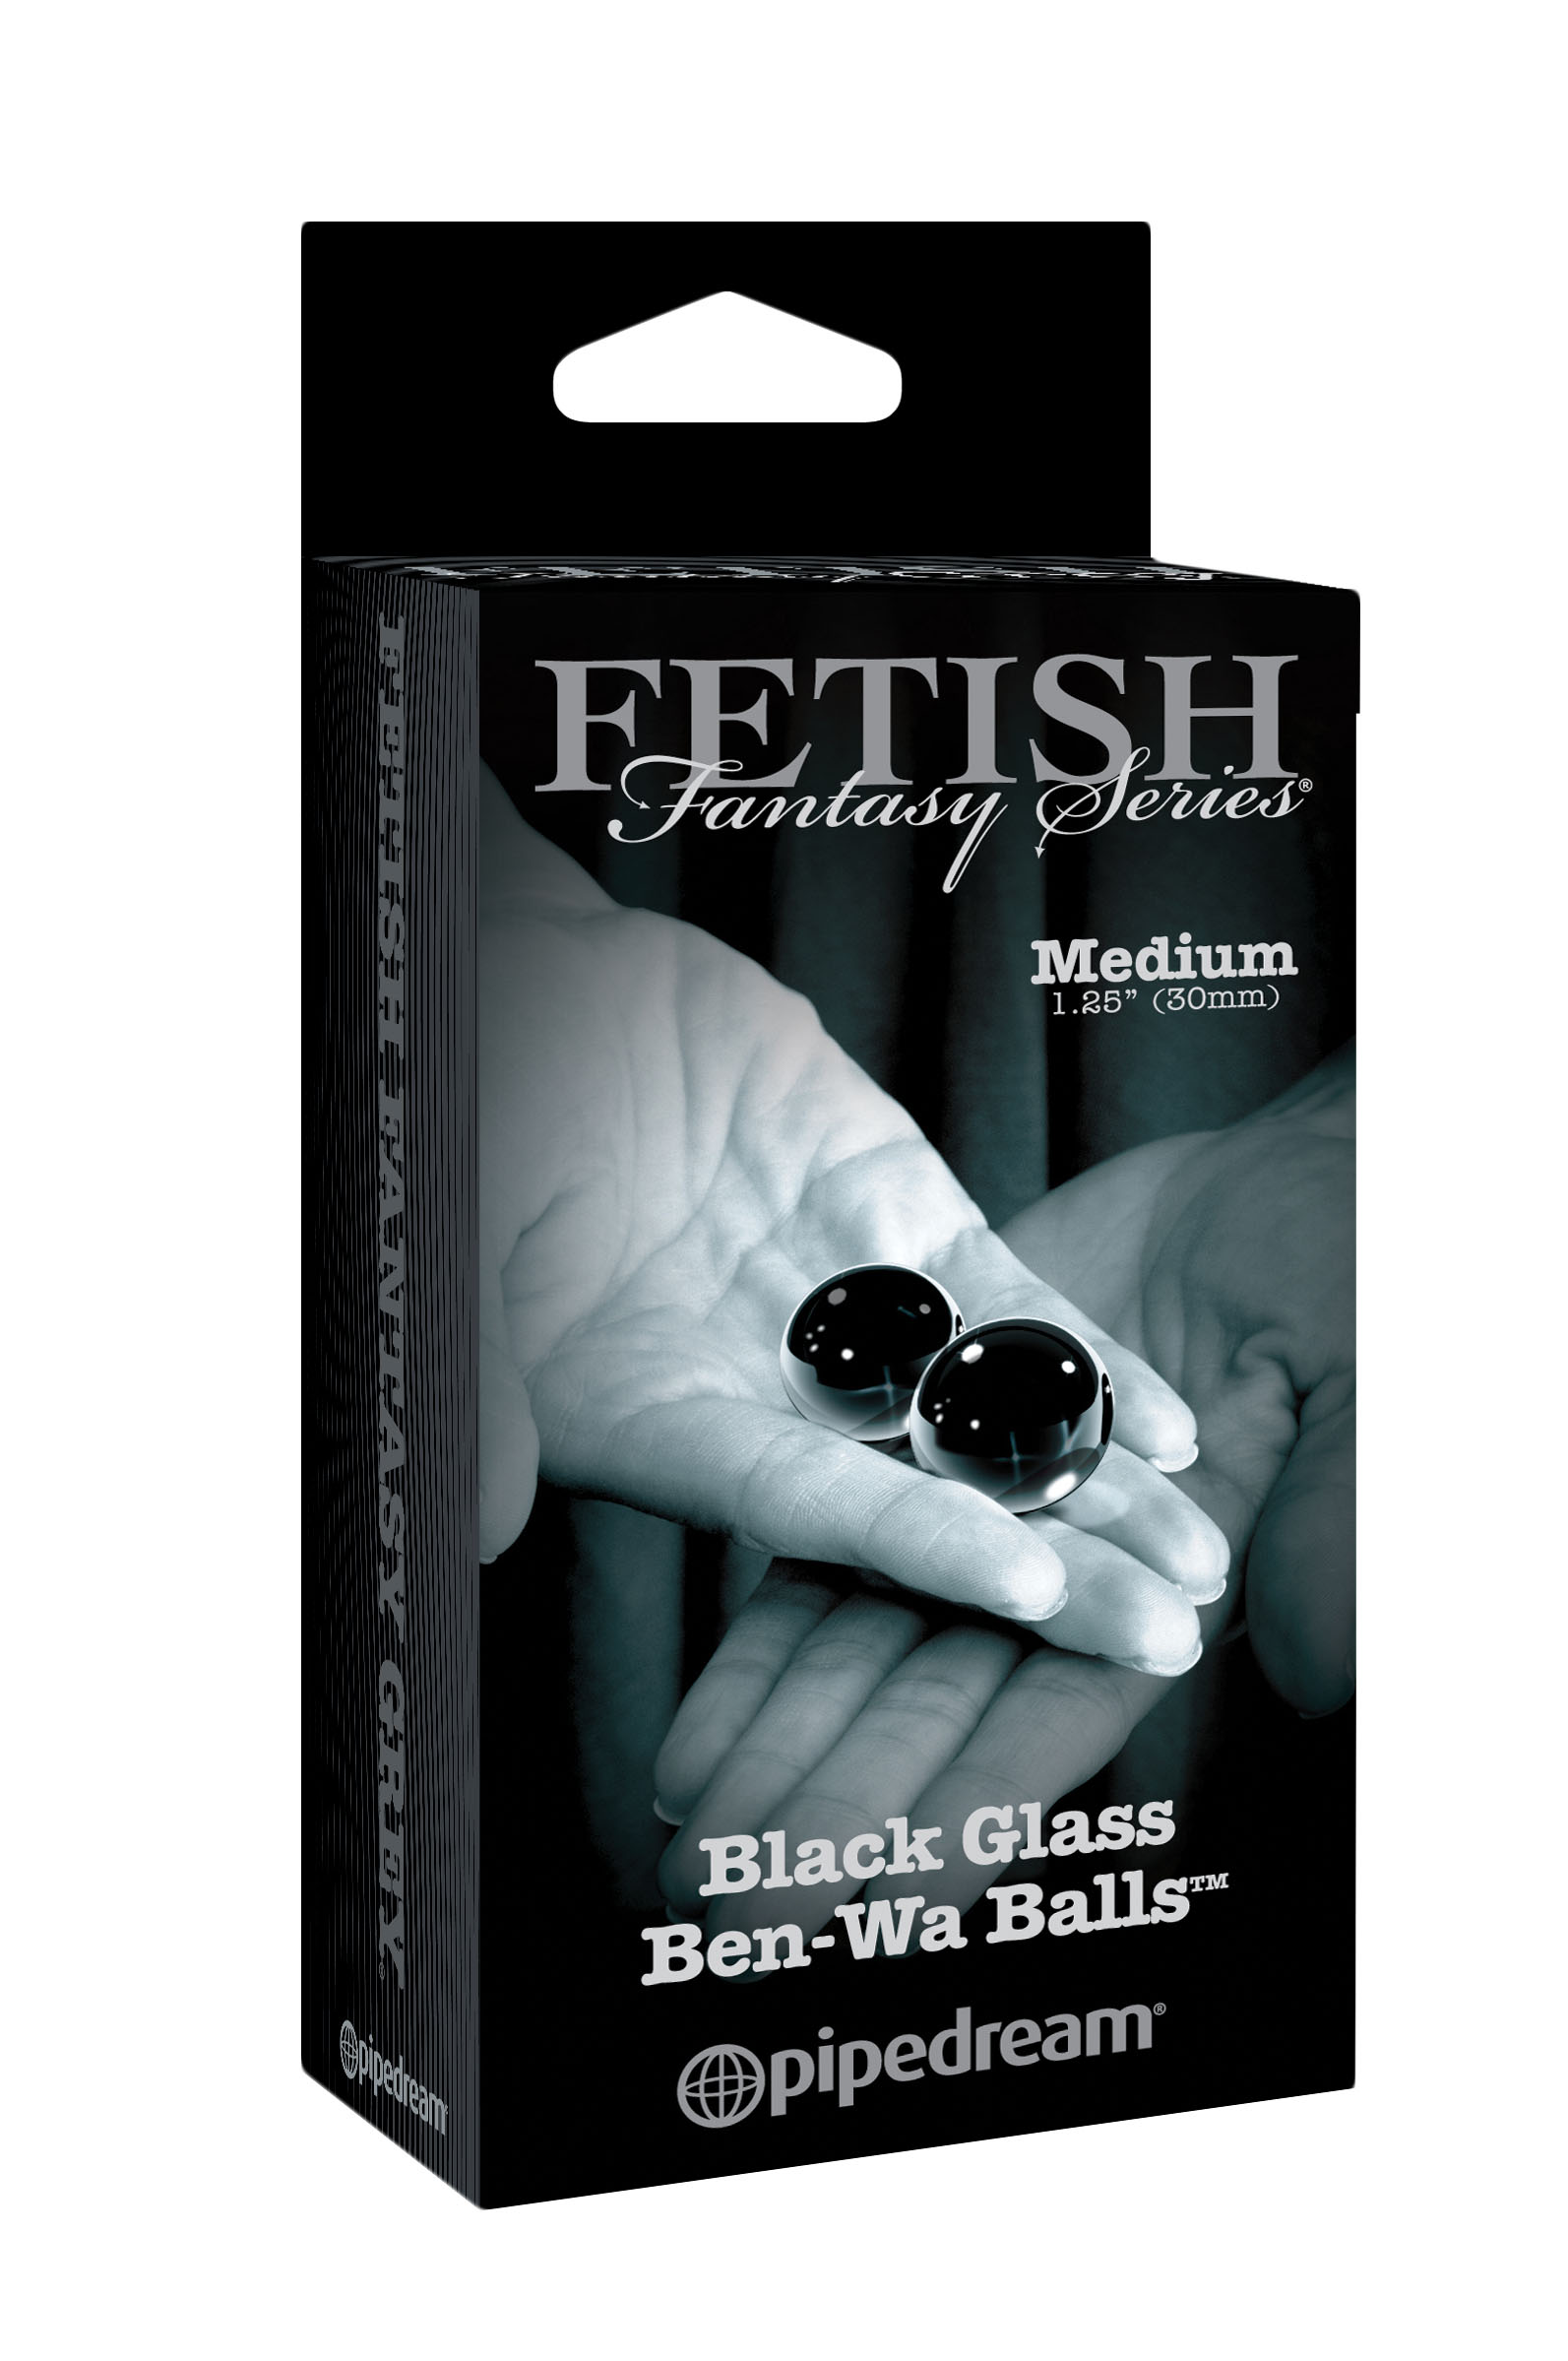 FETISH FANTASY LIMITED EDITION MED GLASS BEN WA BALLS  - PD443423